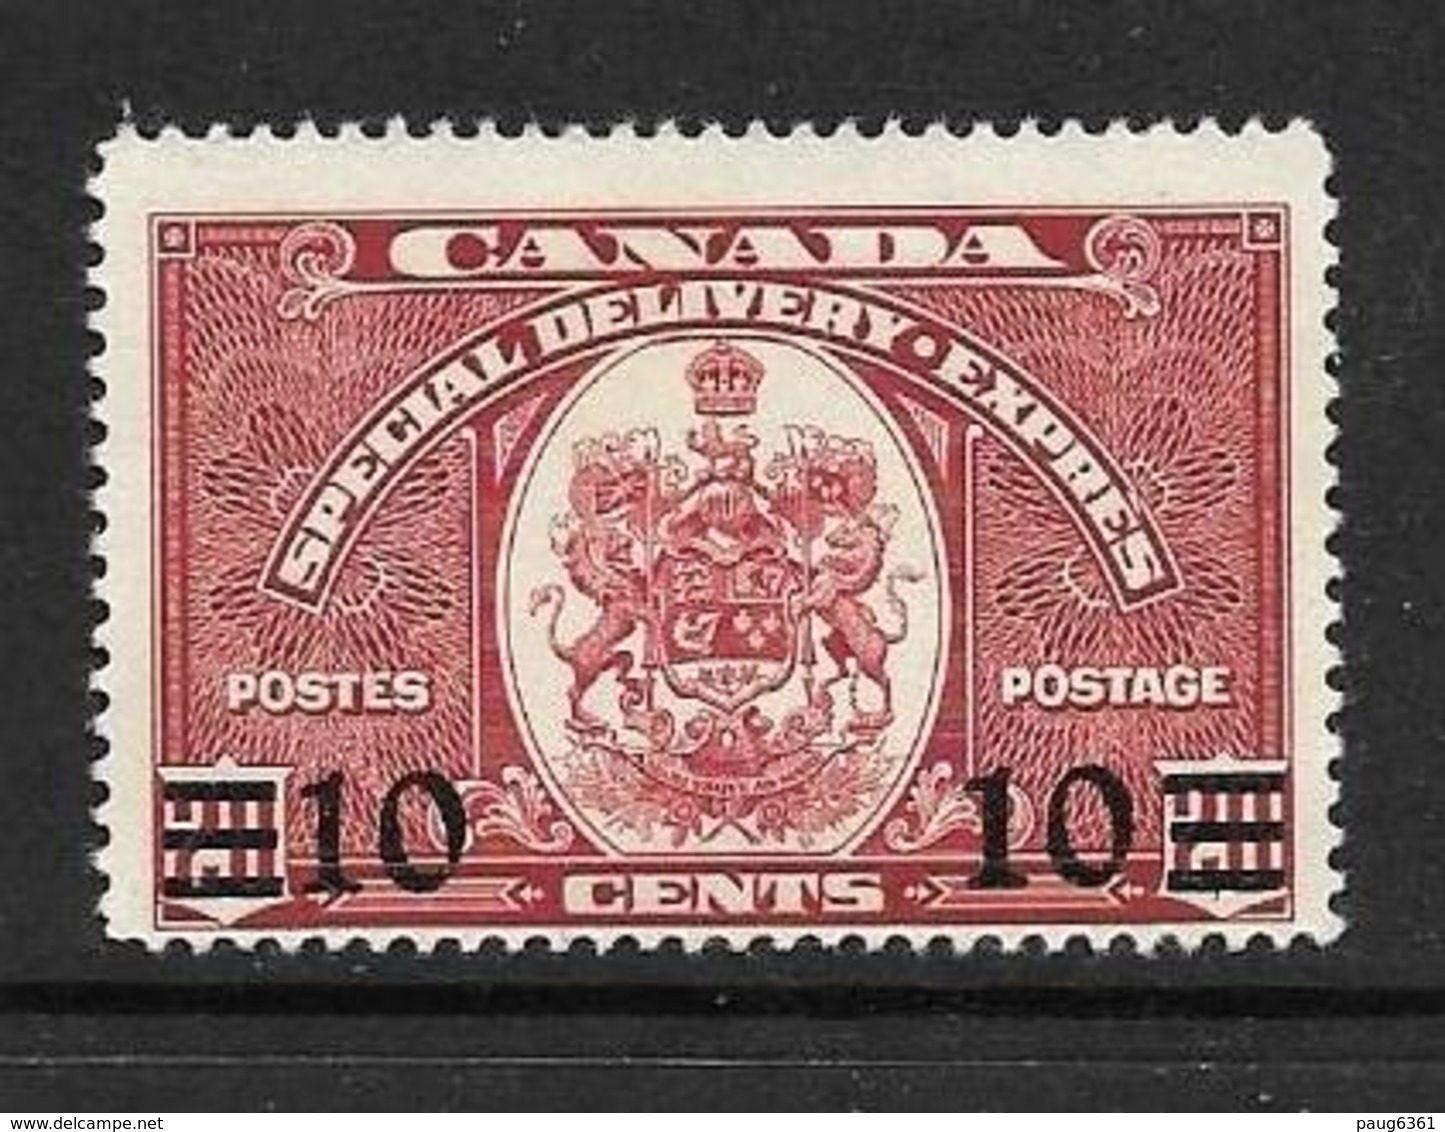 CANADA 1938/39 EXPRES YVERT N°E9 NEUF NG - Exprès